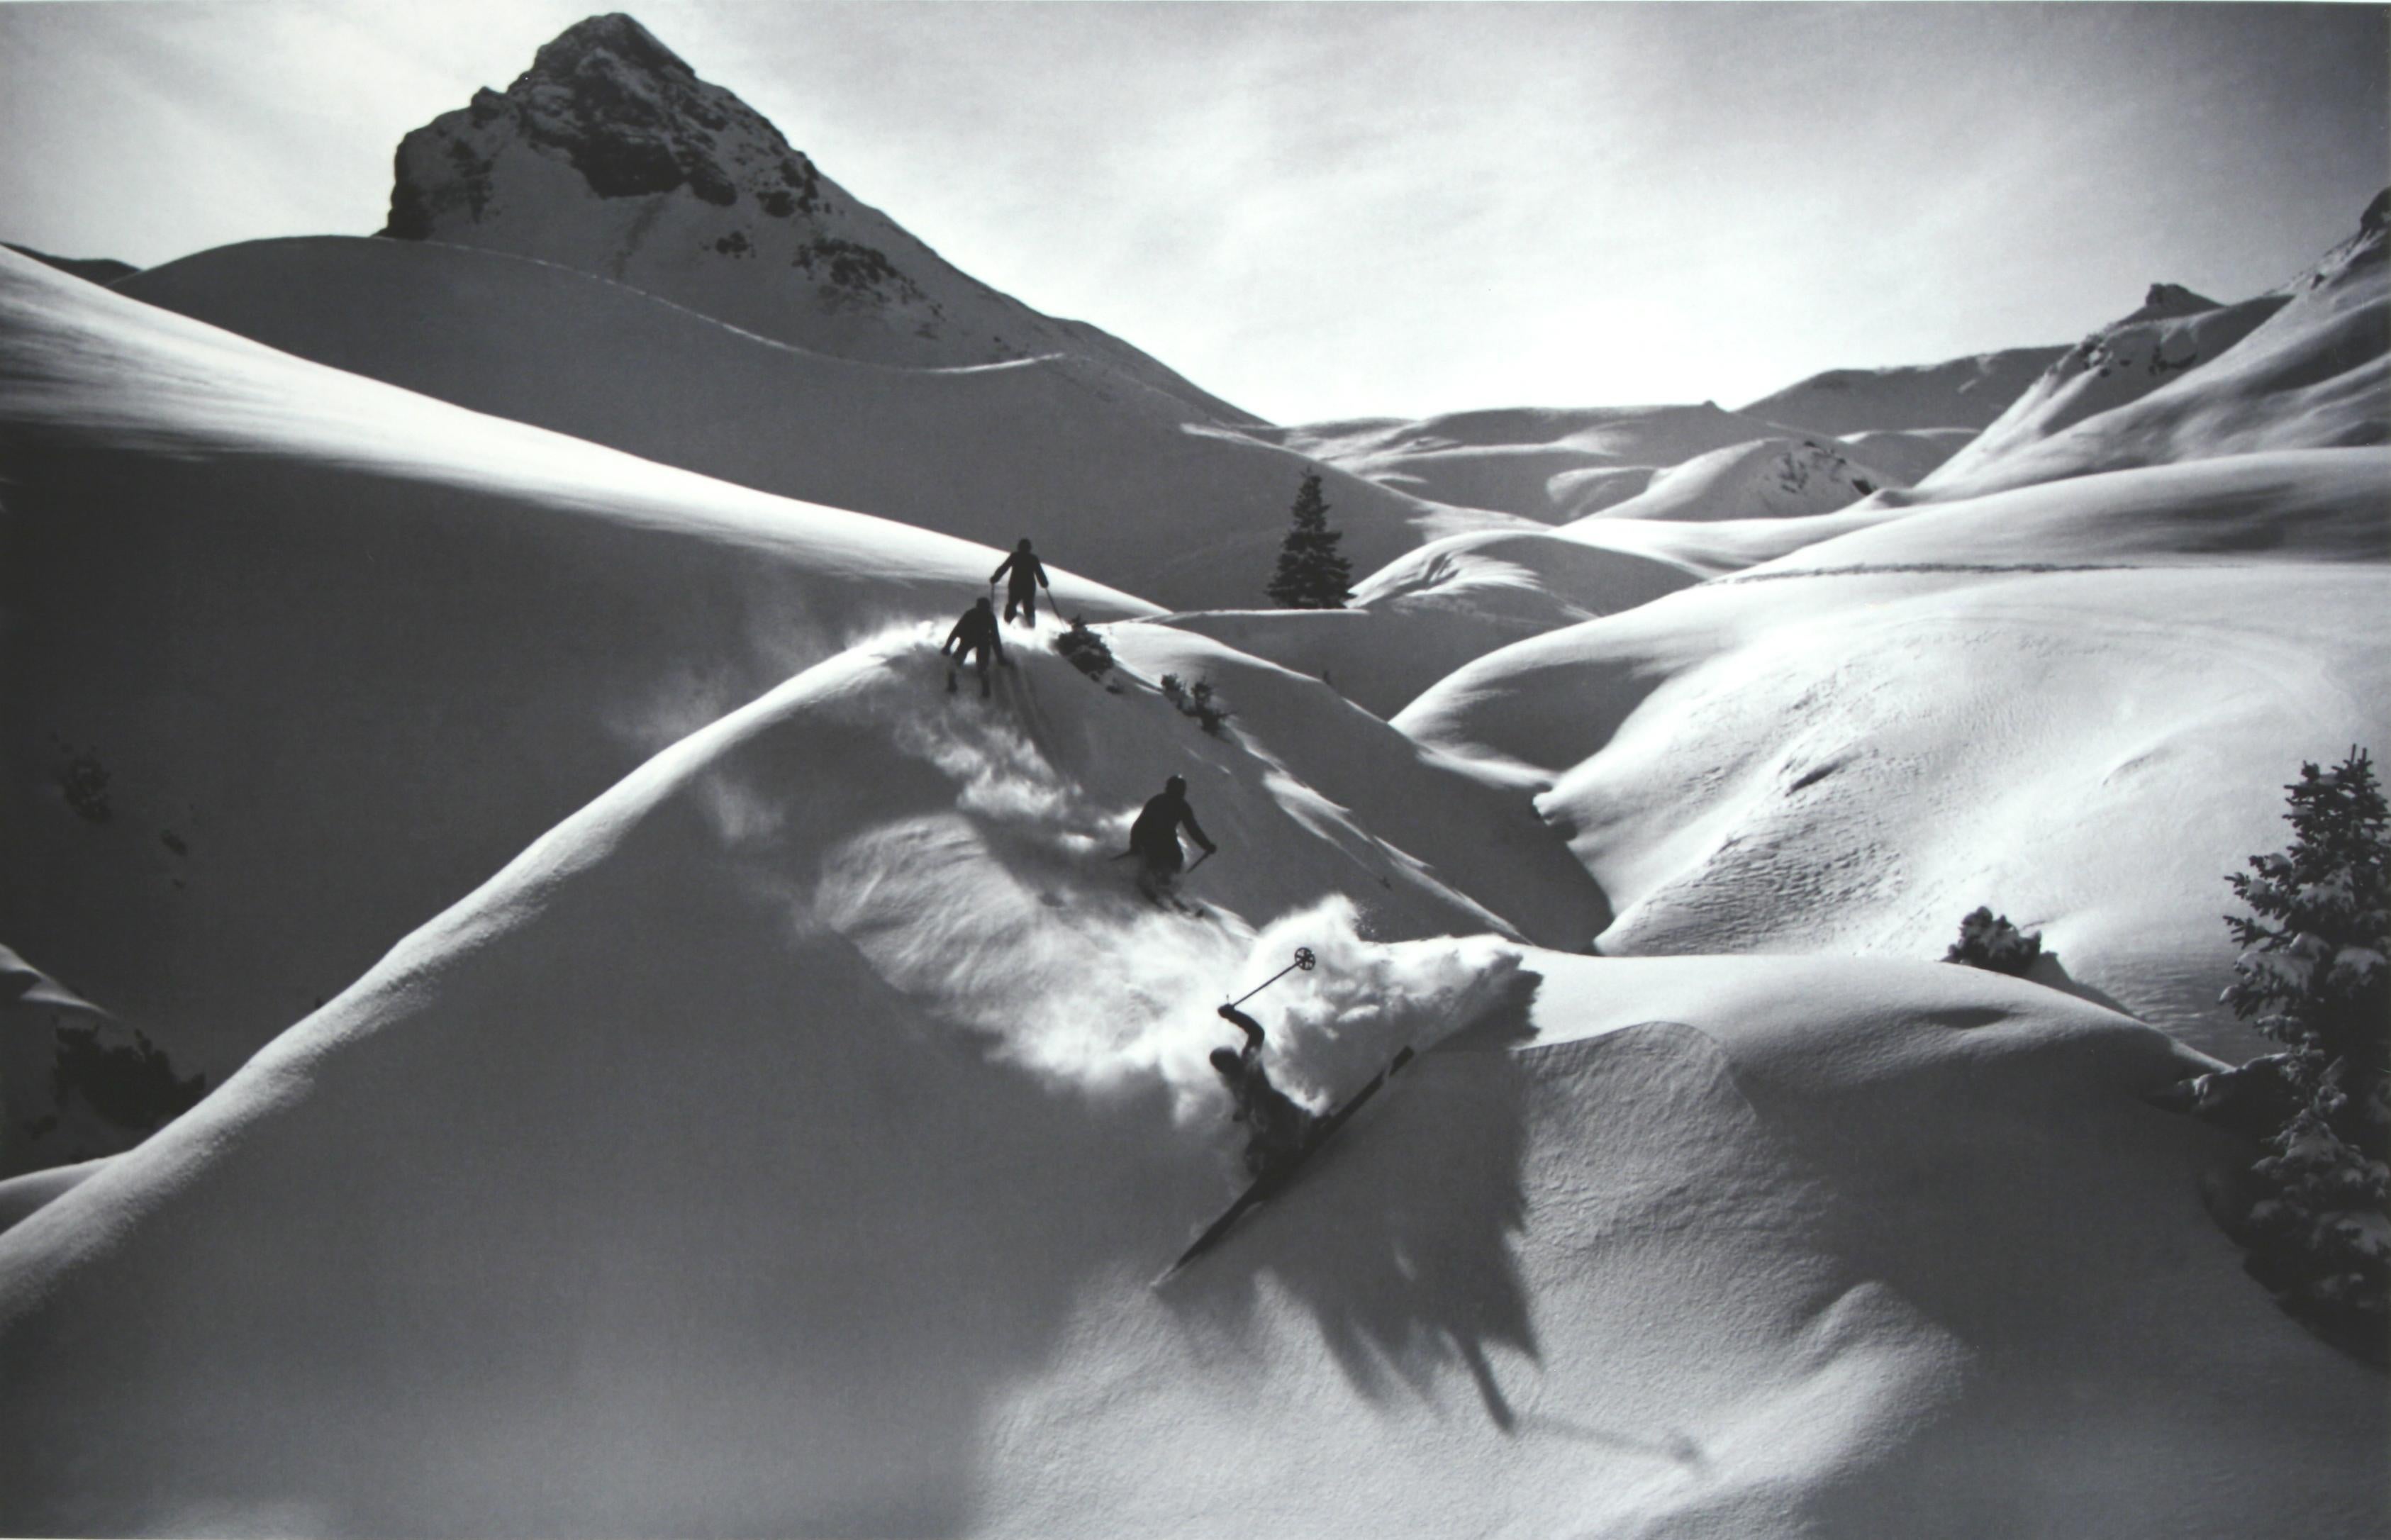 Photographie de ski alpin.
vIRGIN POWDER